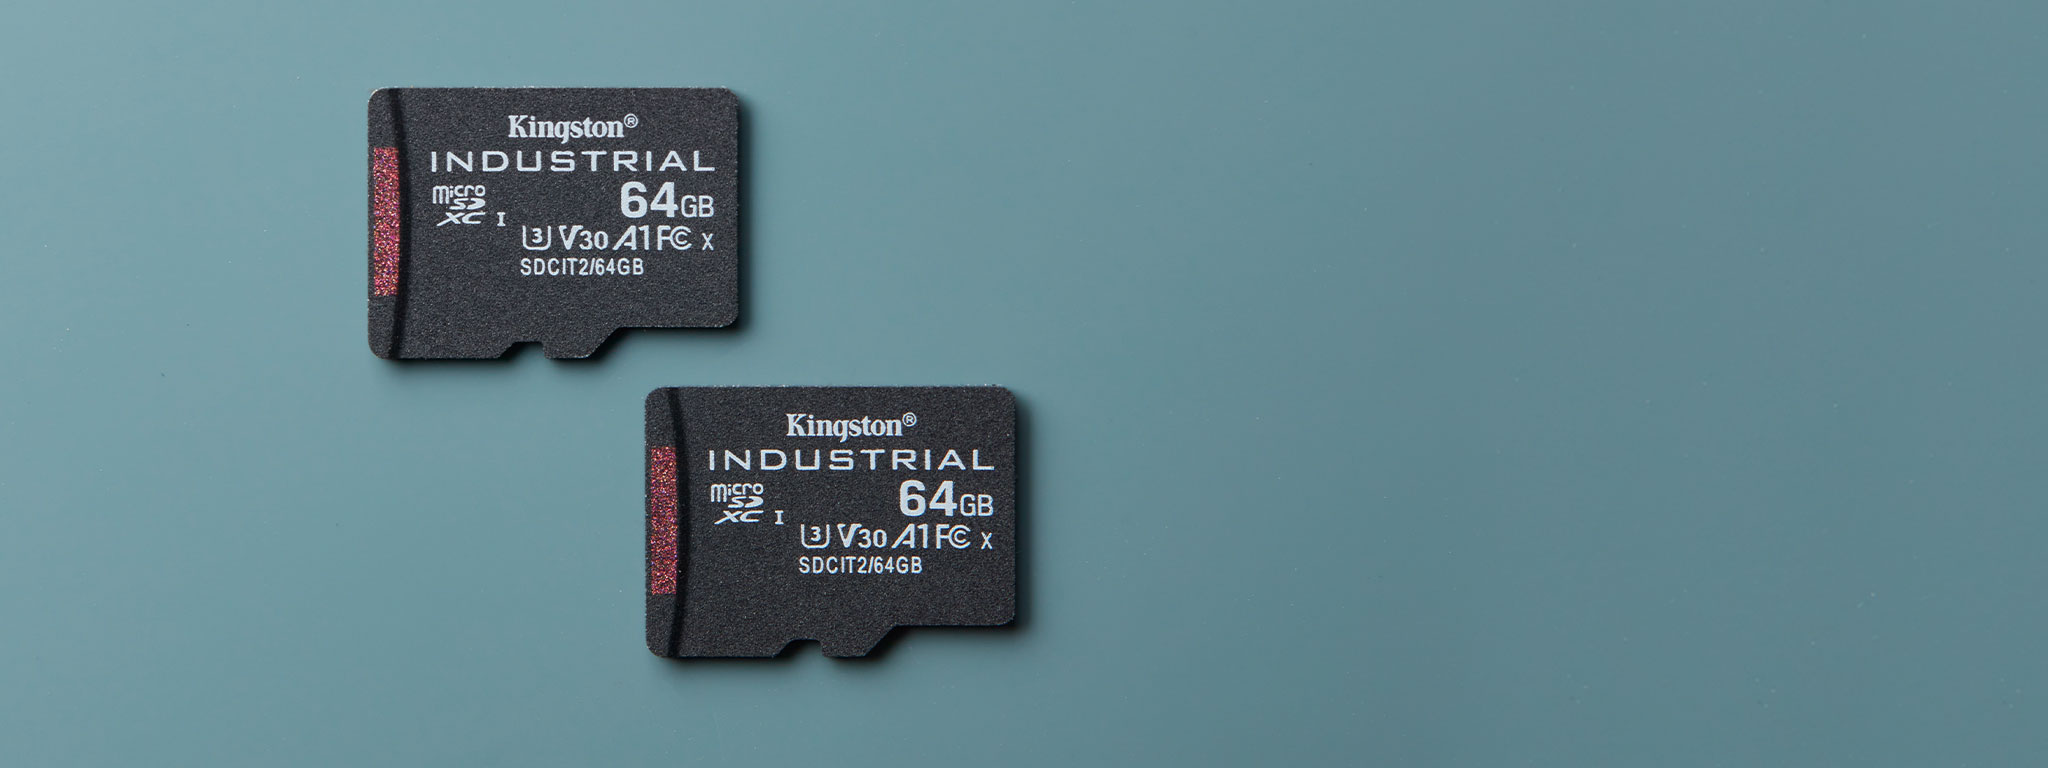 MicroSD industrial SDCIT2